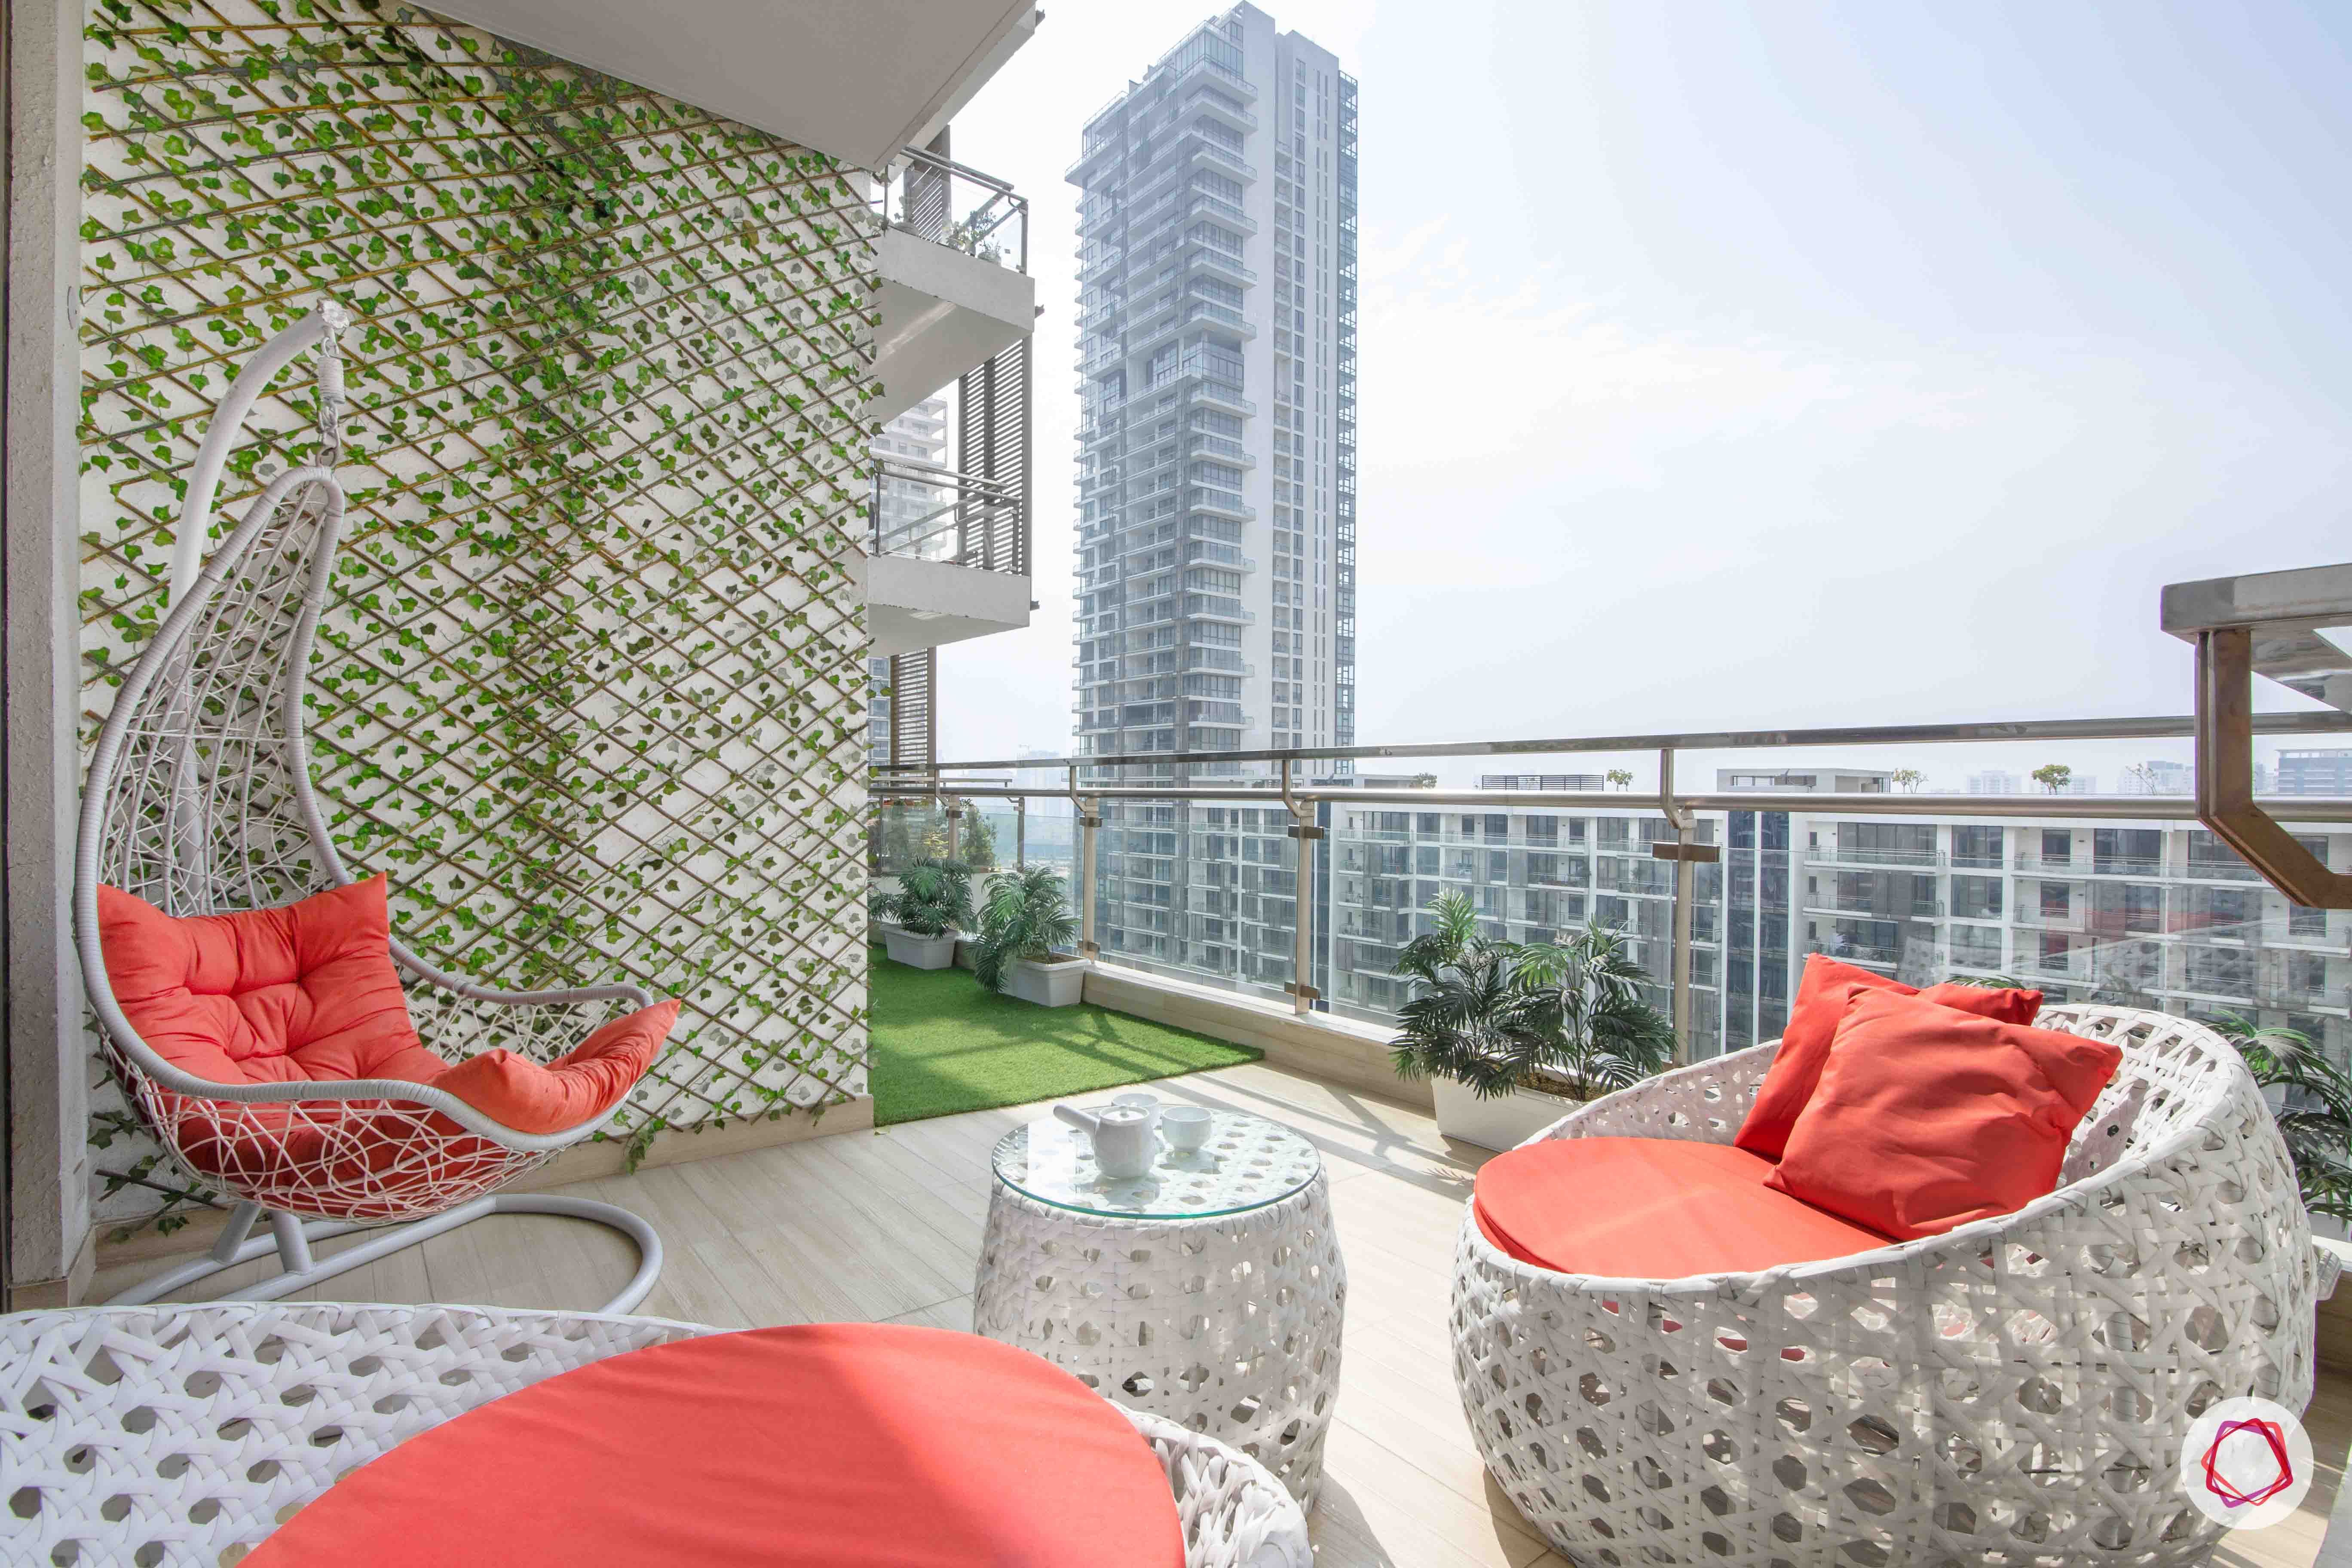 duplex house images-balcony seating ideas-balcony garden ideas-swings for balcony